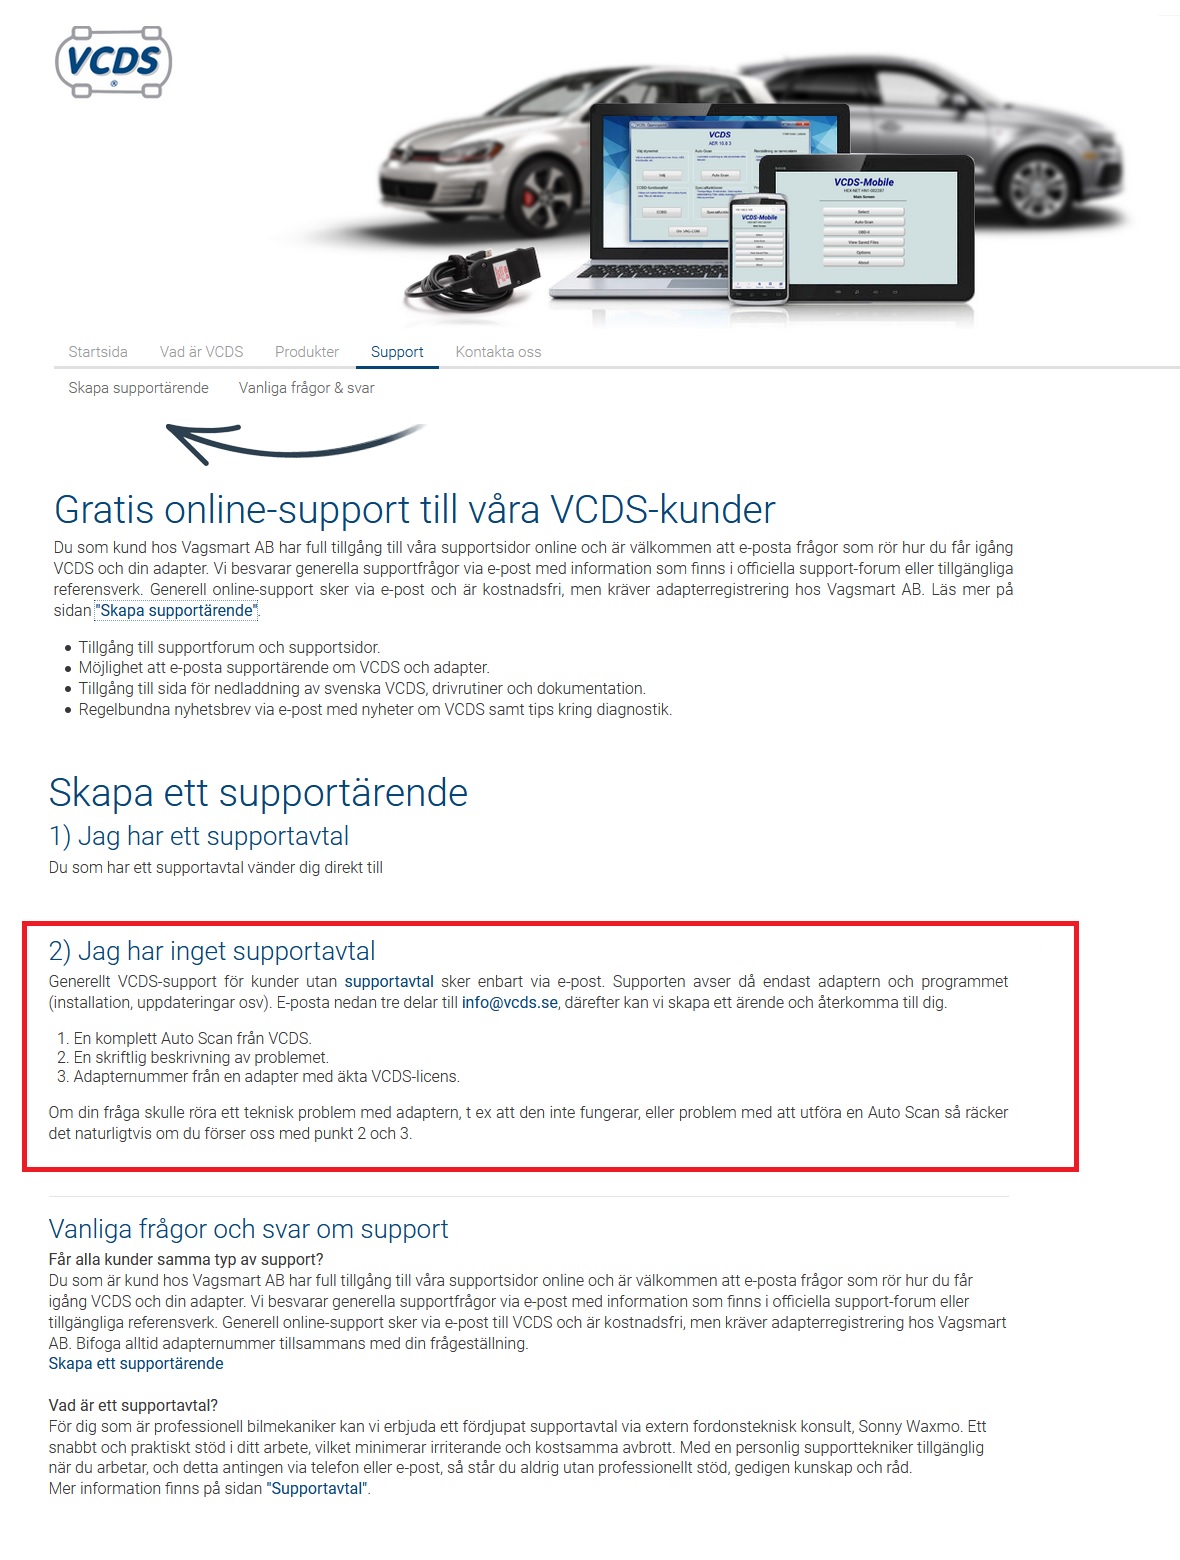 Namn:  VCDS support rende.jpg
Visningar: 1558
Storlek:  418.2 KB